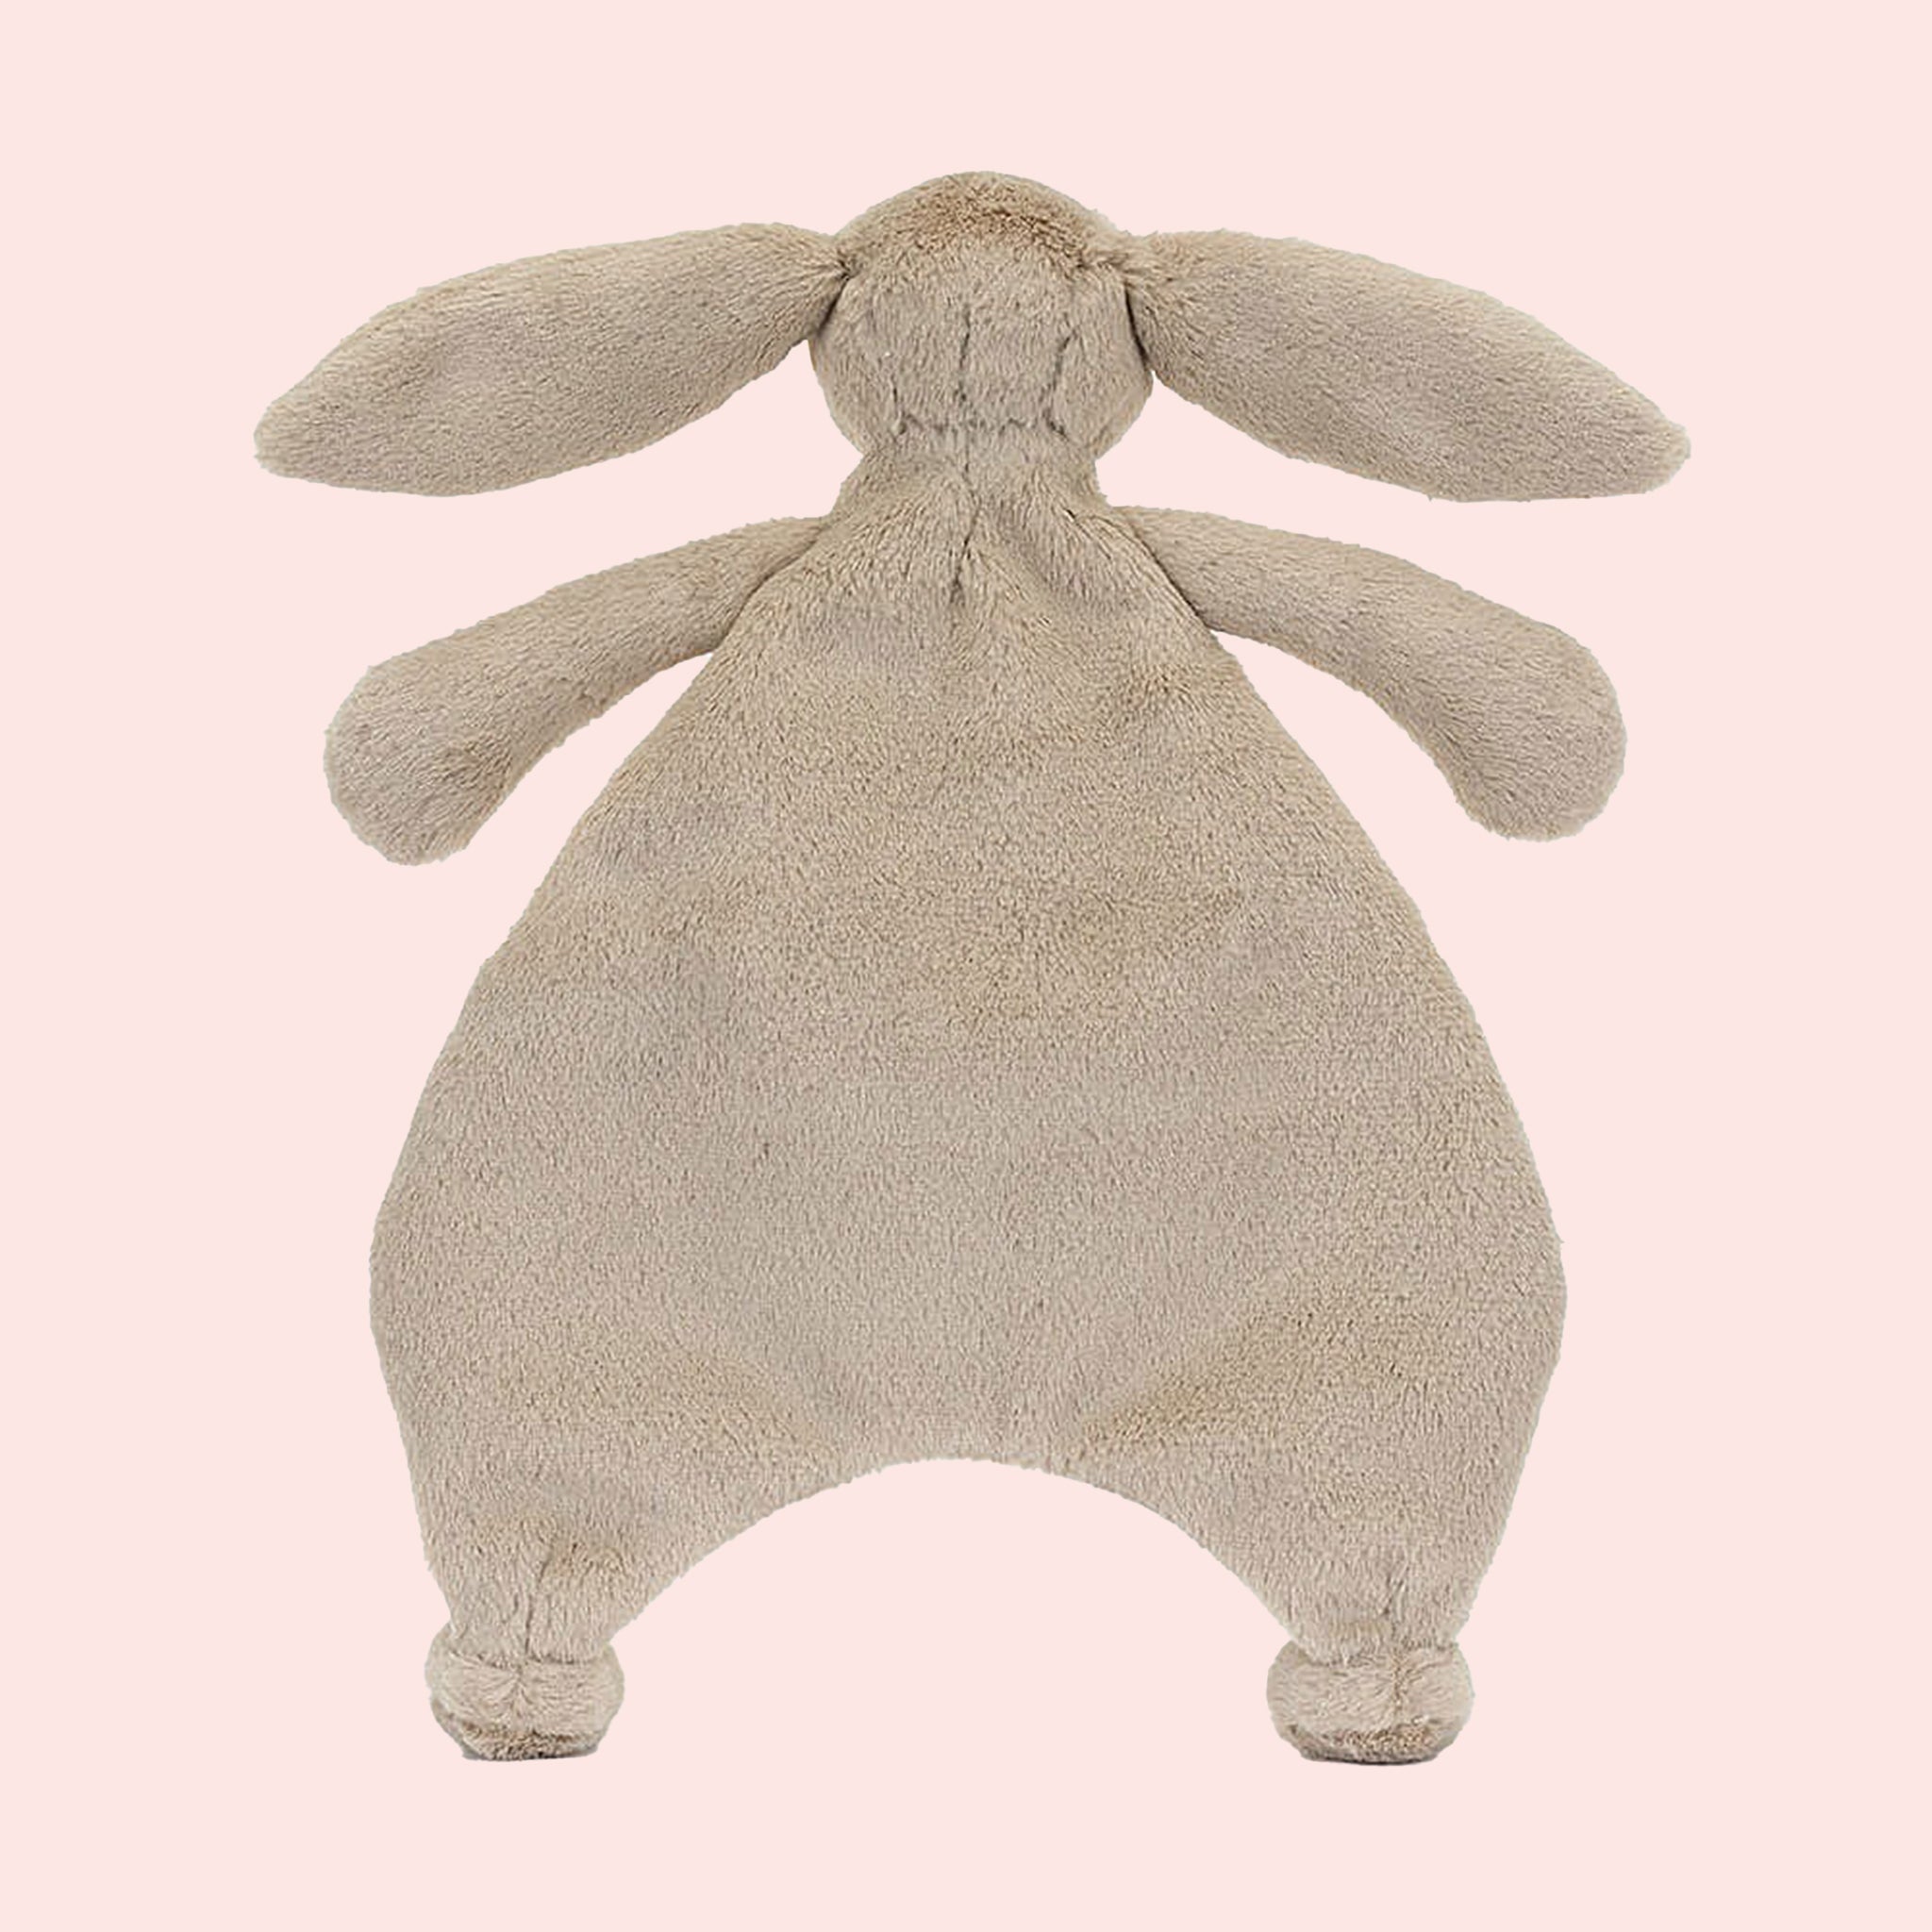 A bunny shaped comforter blanket.